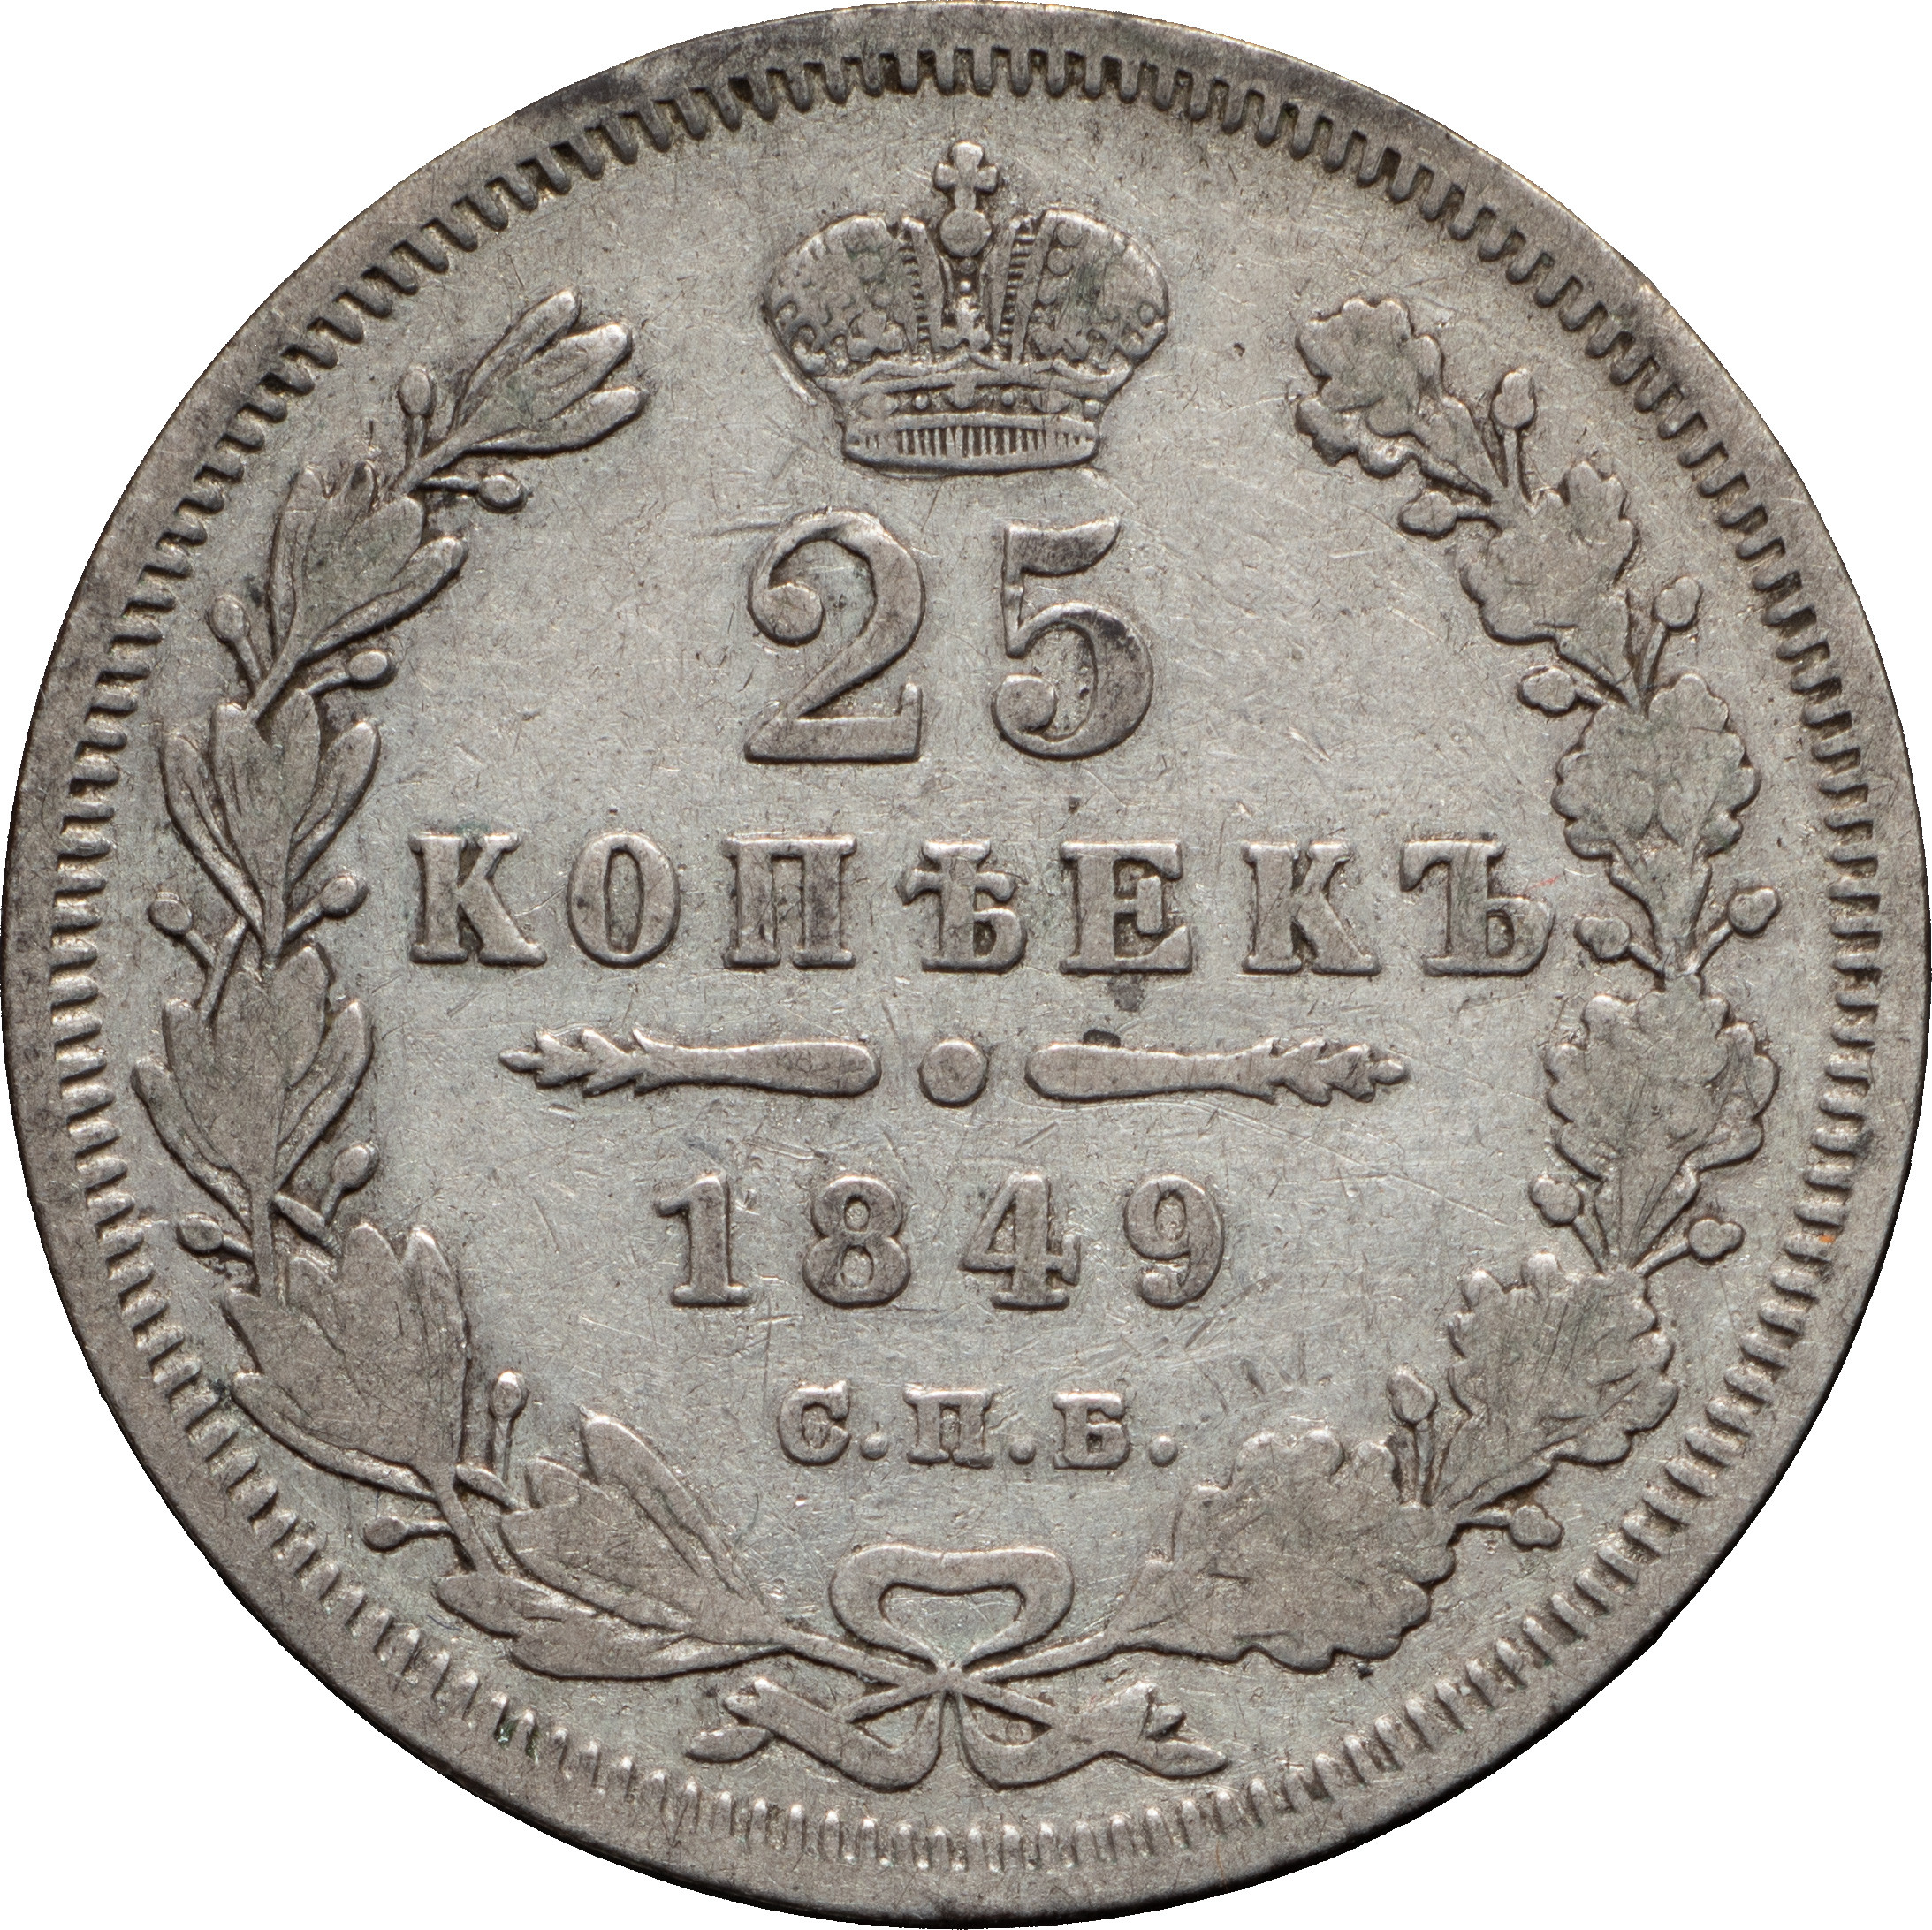 25 копеек 1849 года